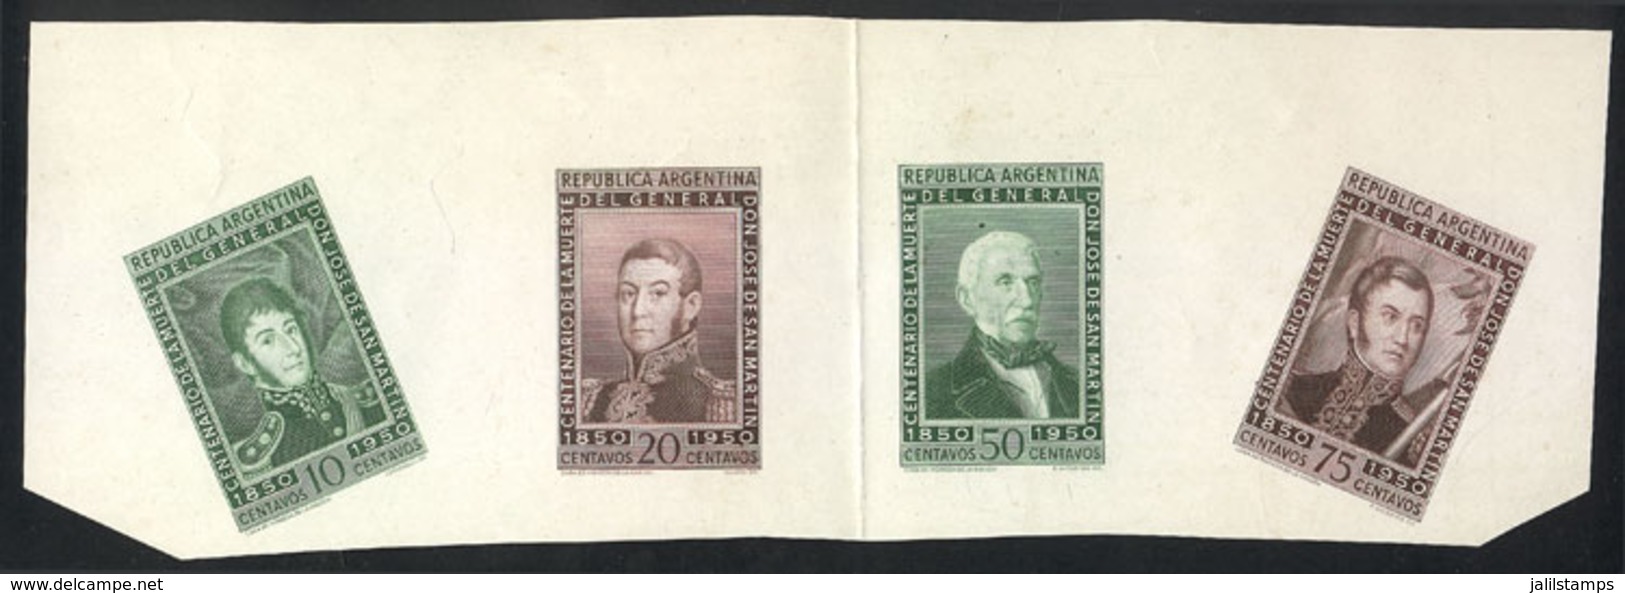 ARGENTINA: GJ.976 + 977 + 979 + 980, 1950 San Martín, MULTIPLE DIE PROOF Of The Engraved Values, Unadopted Colors, Print - Gebruikt